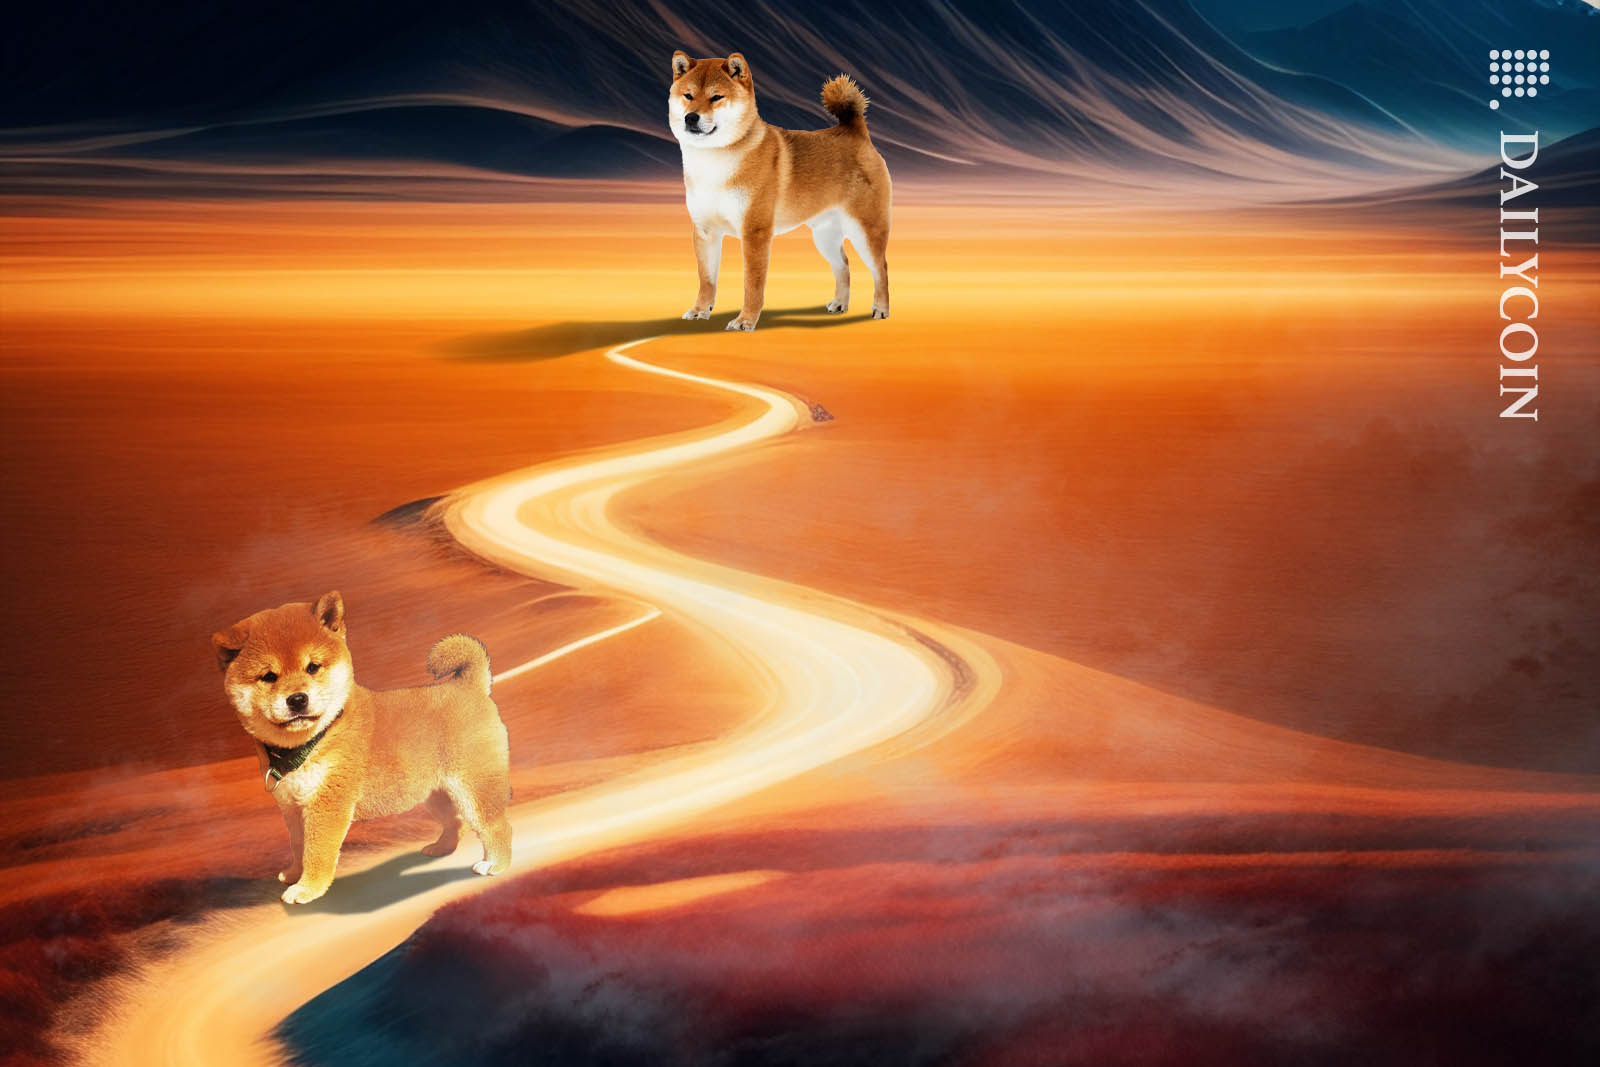 A Shiba Inu puppy walking down a desert path, followed by an adult Shiba Inu.